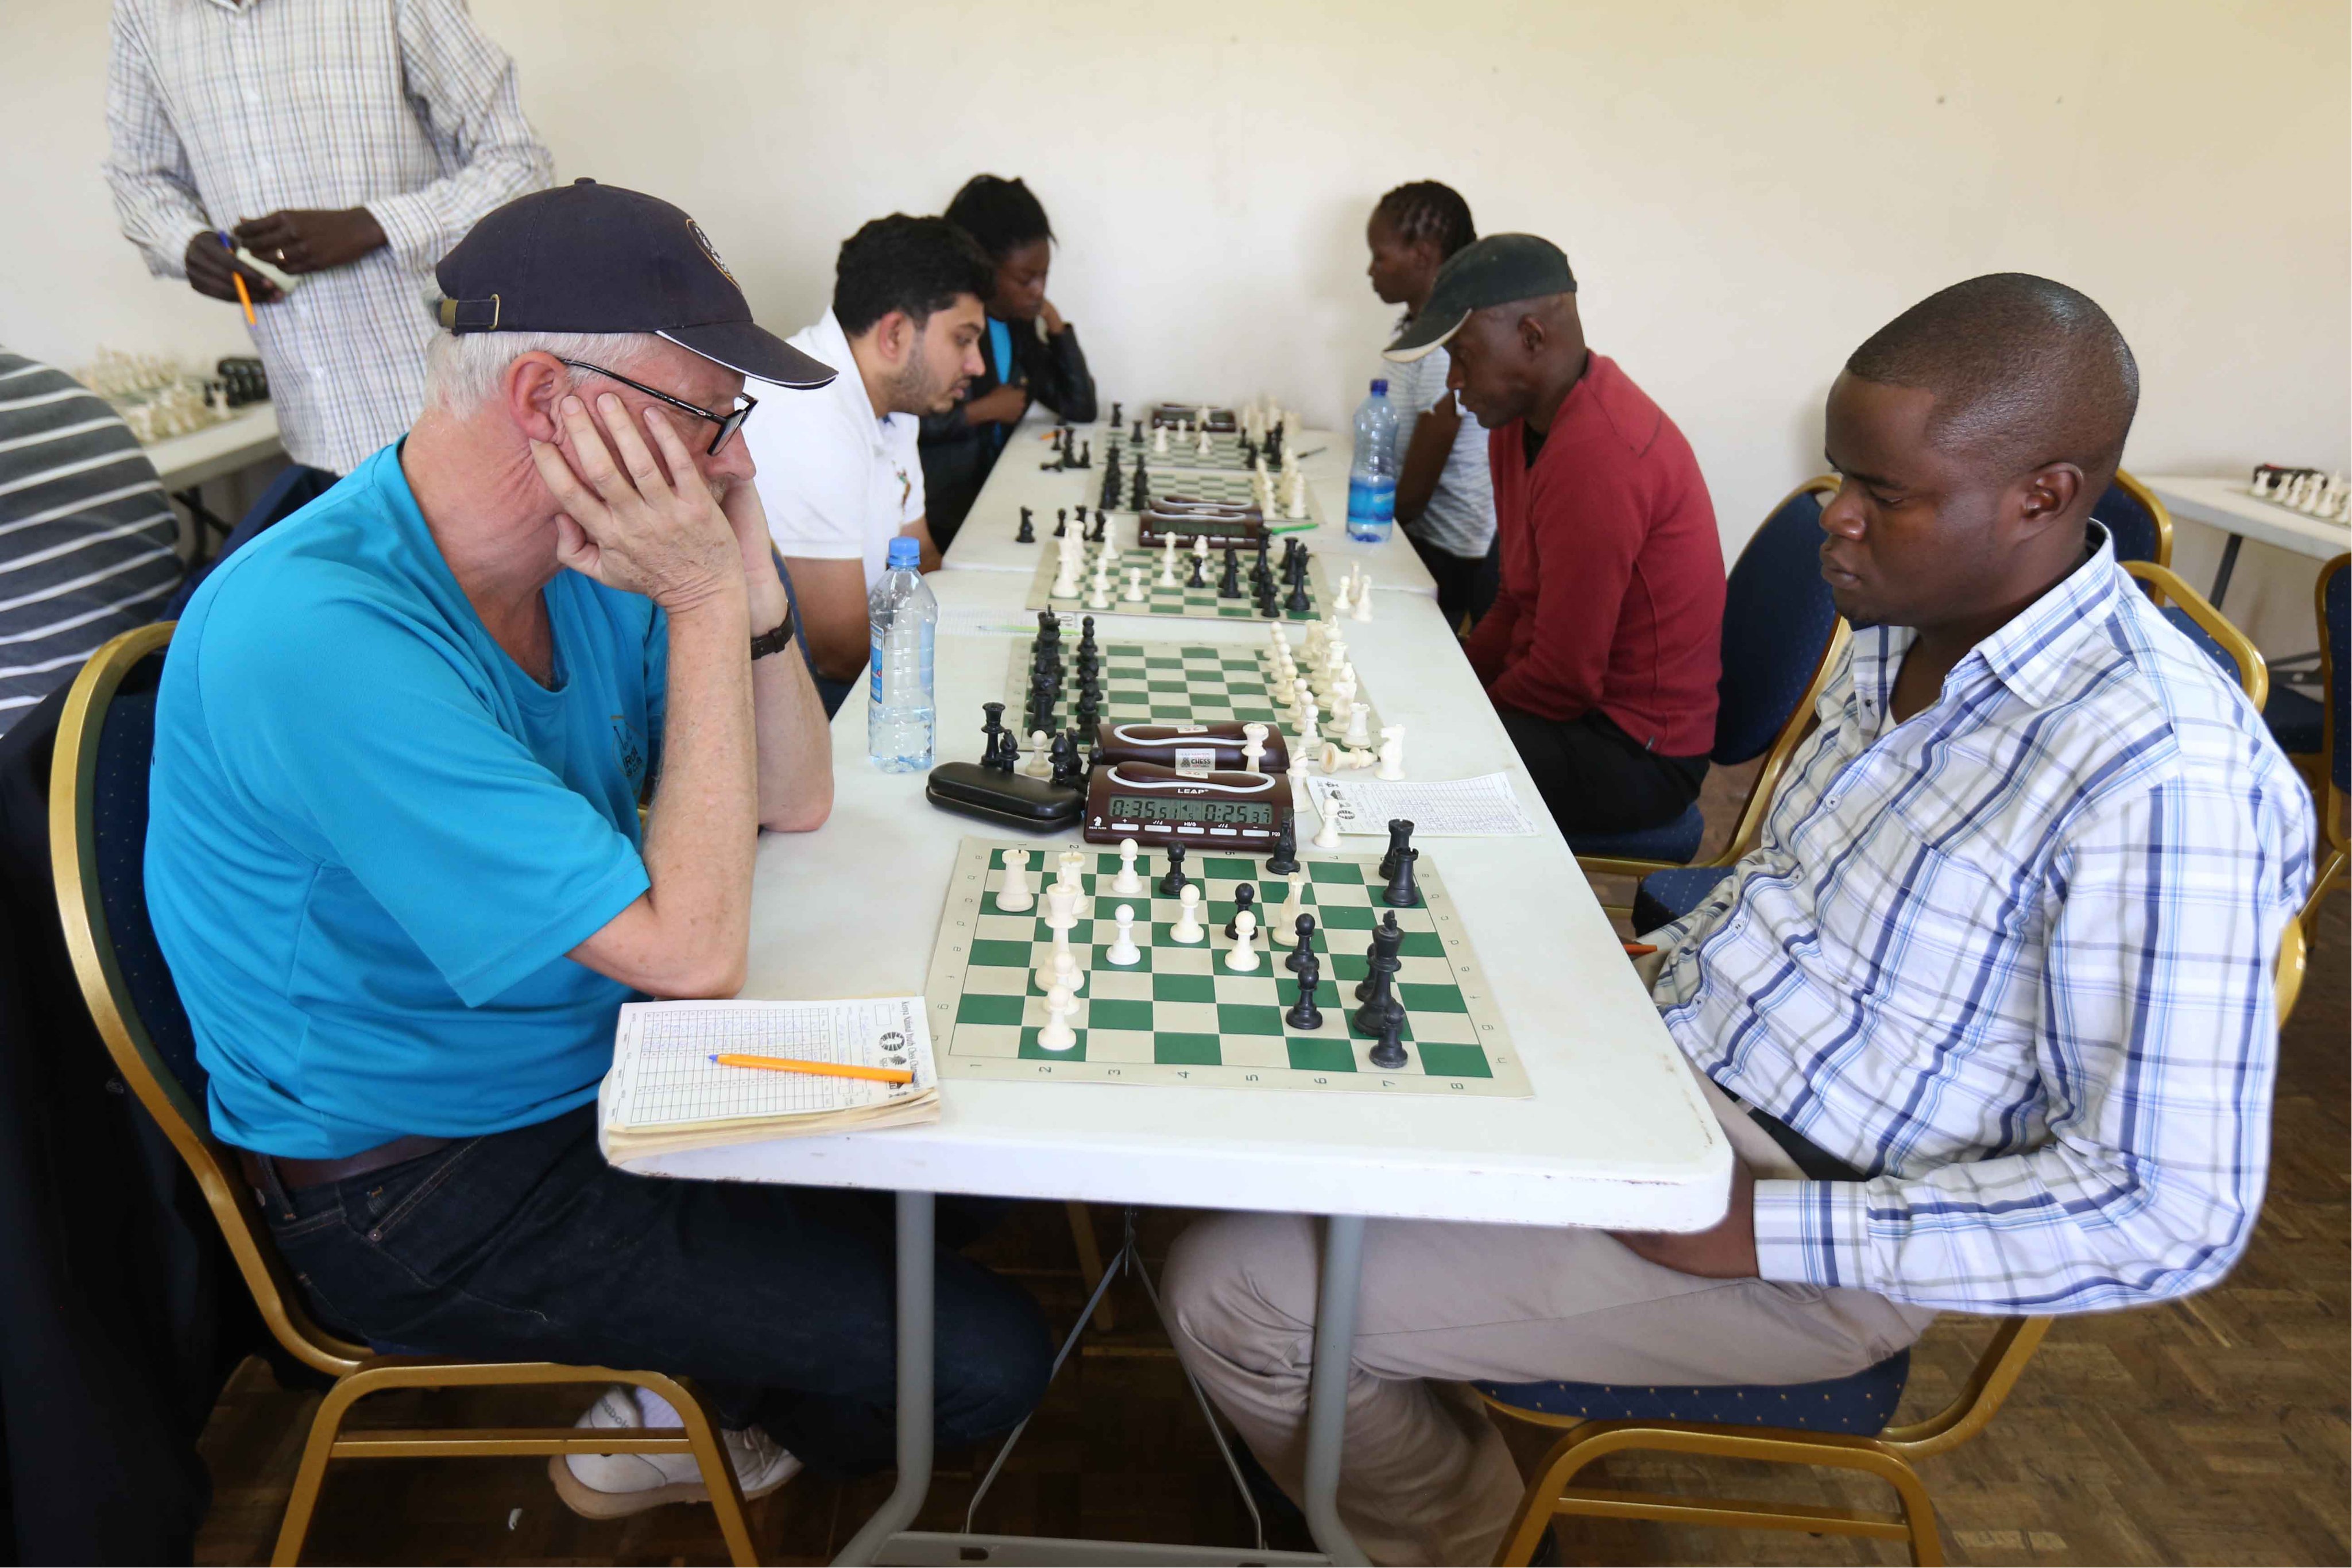 Chess Kenya - 44TH WORLD OLYMPIAD 2022 TEAM KENYA PLAYER